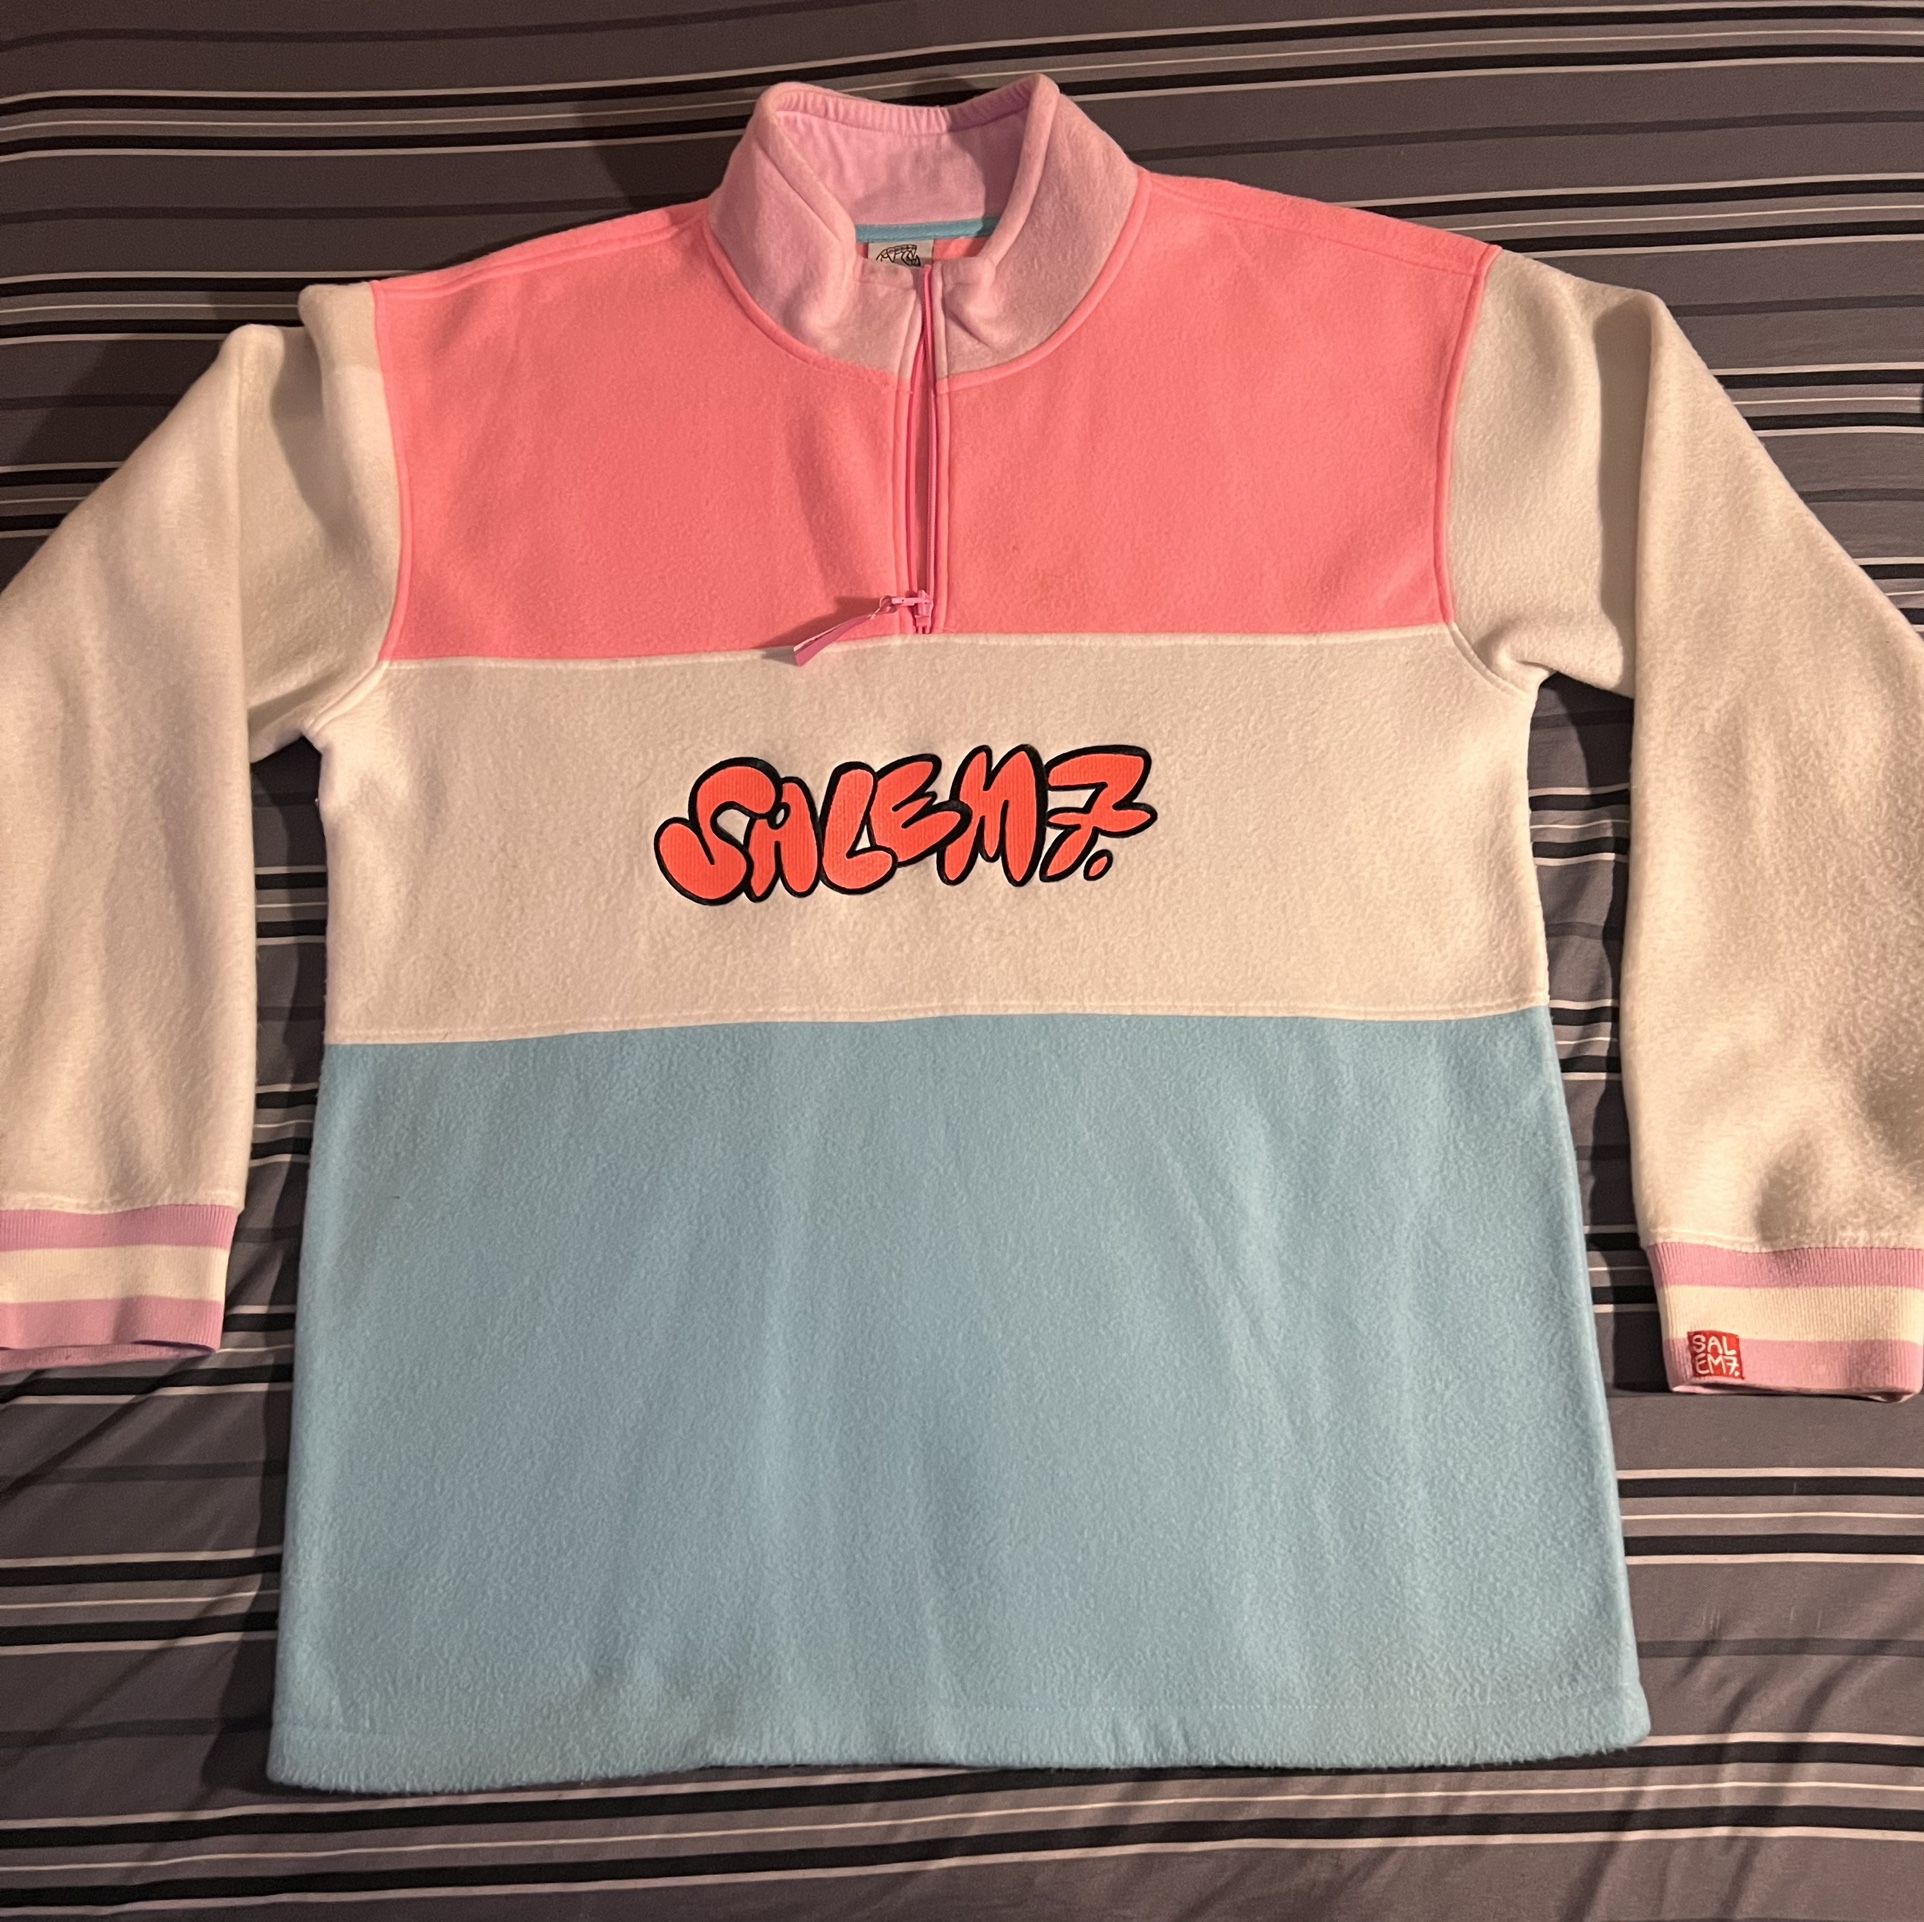 “Salem7” Sweater.  Size:XL.  Color:Pink/White/Blue